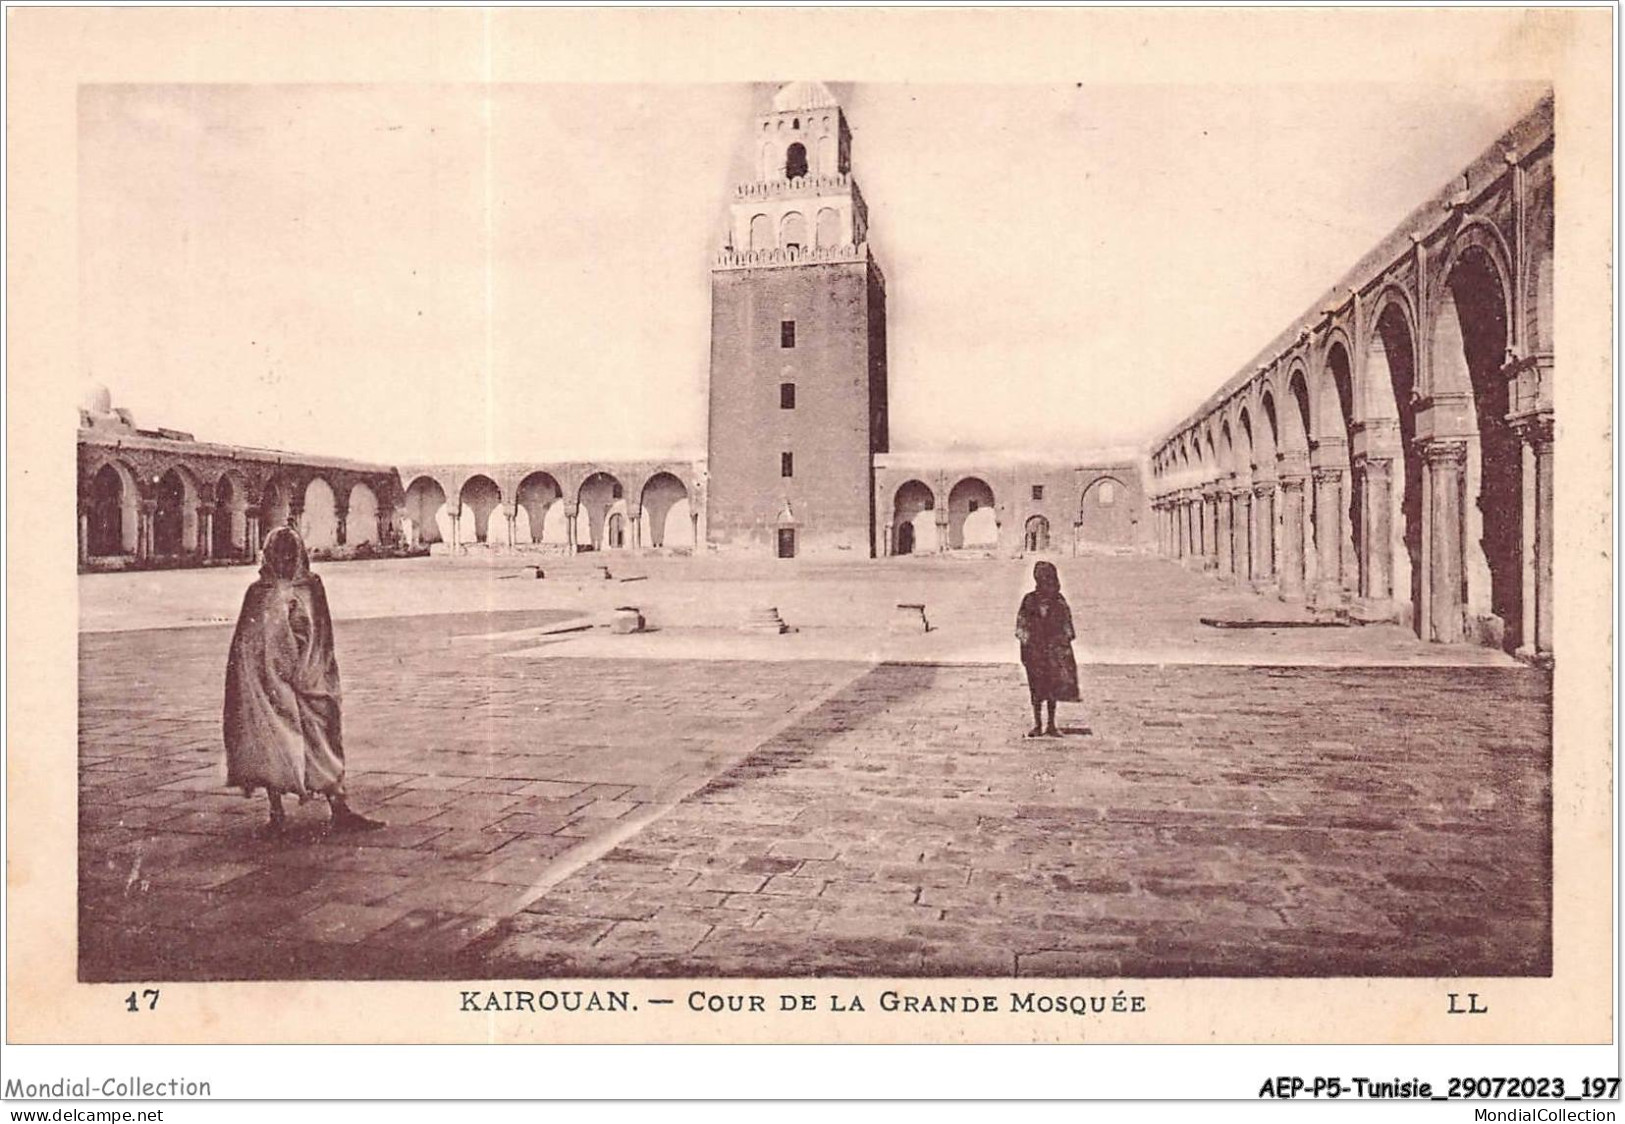 AEPP5-TUNISIE-0466 - KAIROUAN - COUR DE LA GRANDE MOSQUEE - Tunisie